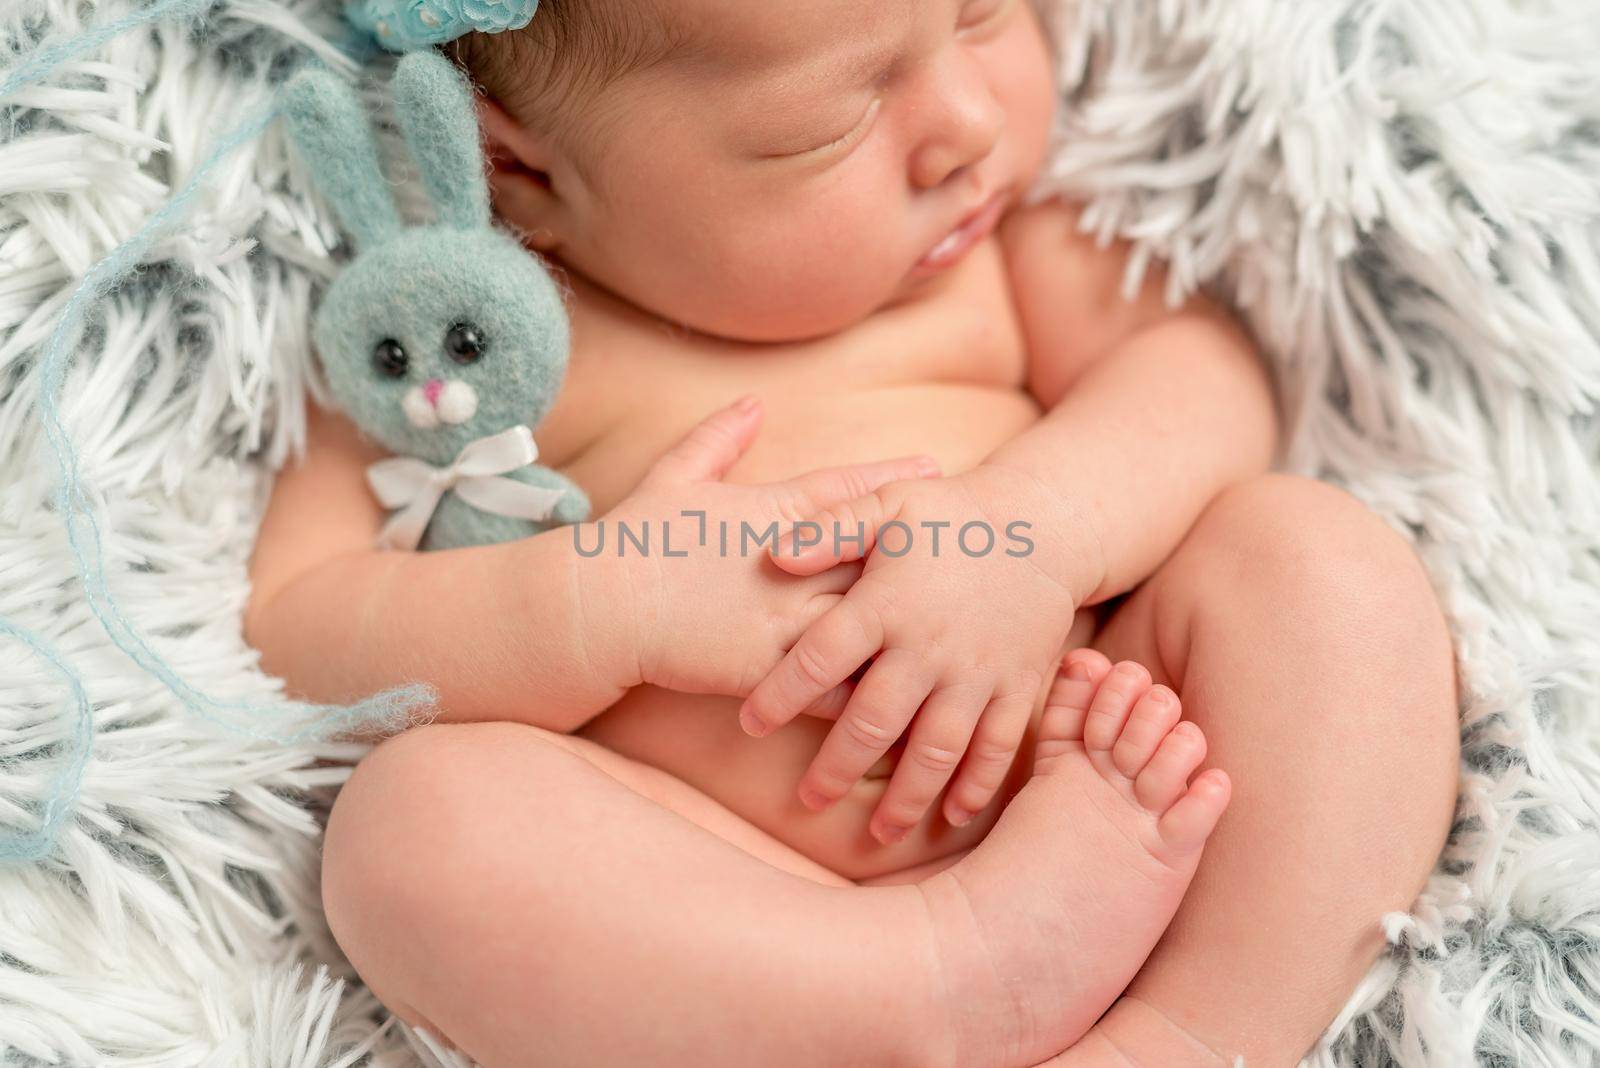 funny sleepy newborn holding little grey toy, closeup by tan4ikk1